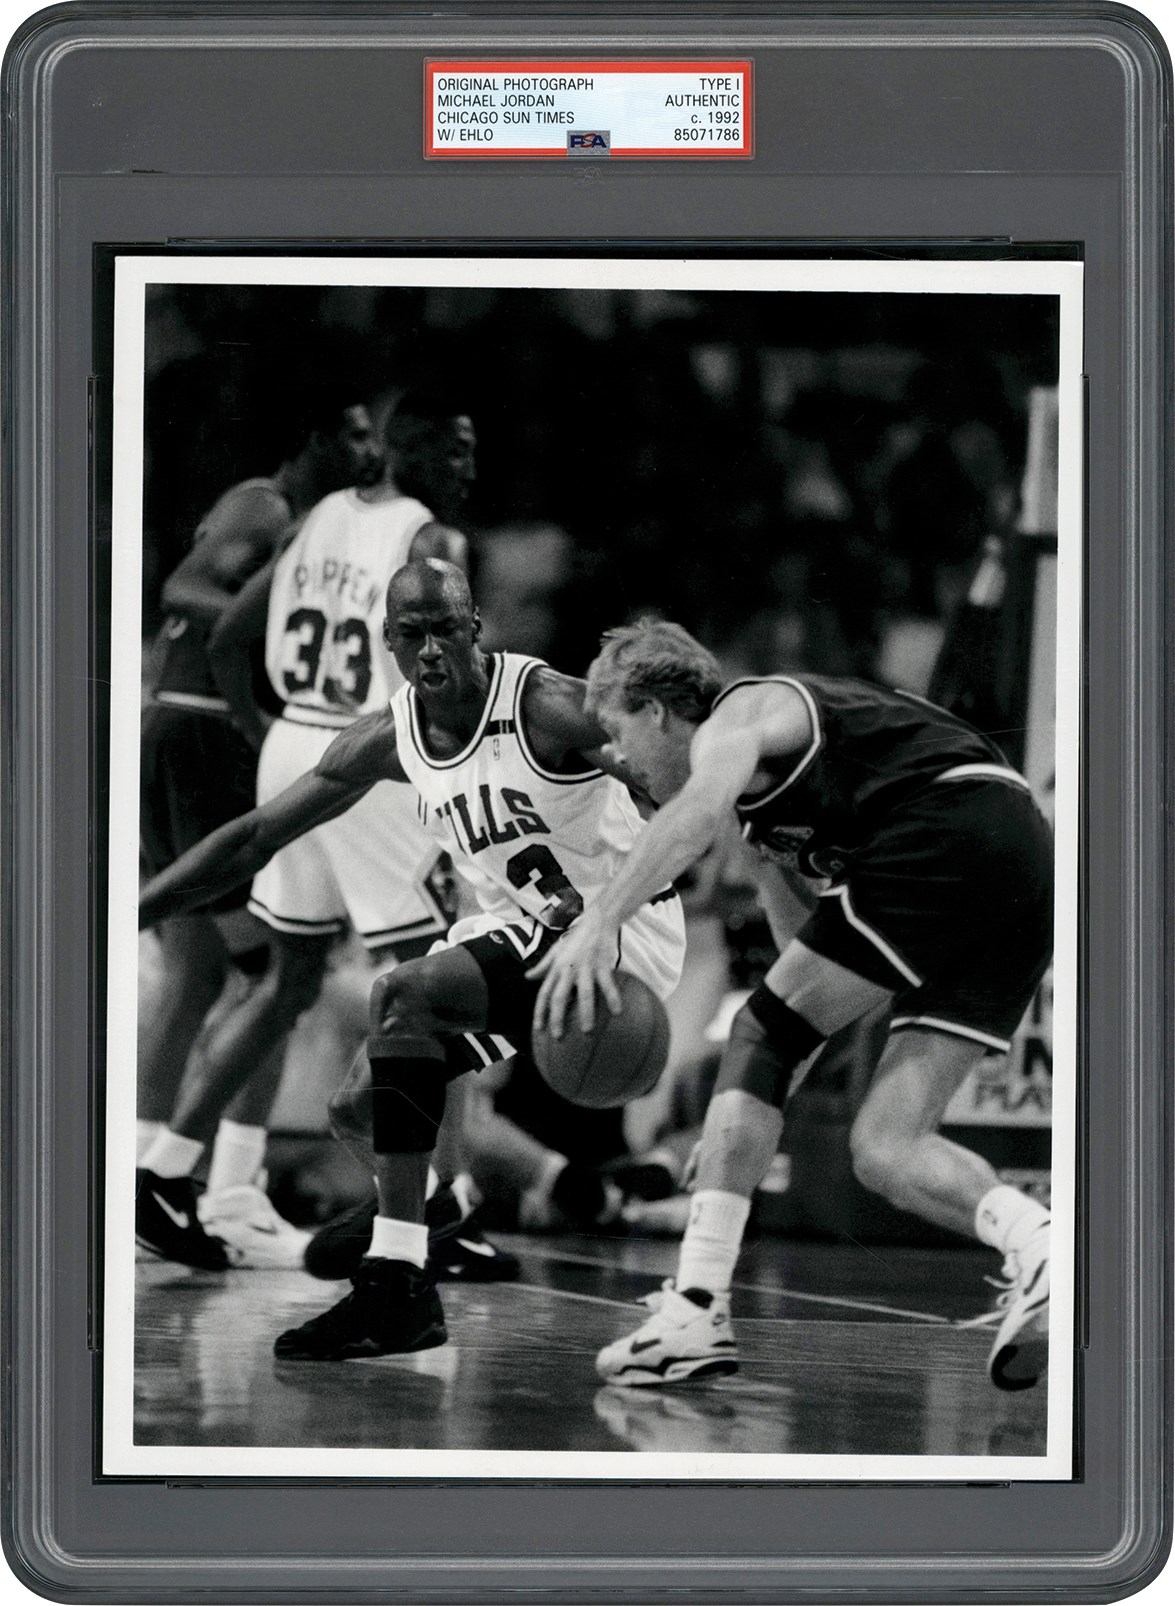 Vintage Sports Photographs - 1992 Michael Jordan Eastern Conference Finals Original Chicago Sun Times Photograph (PSA Type I)